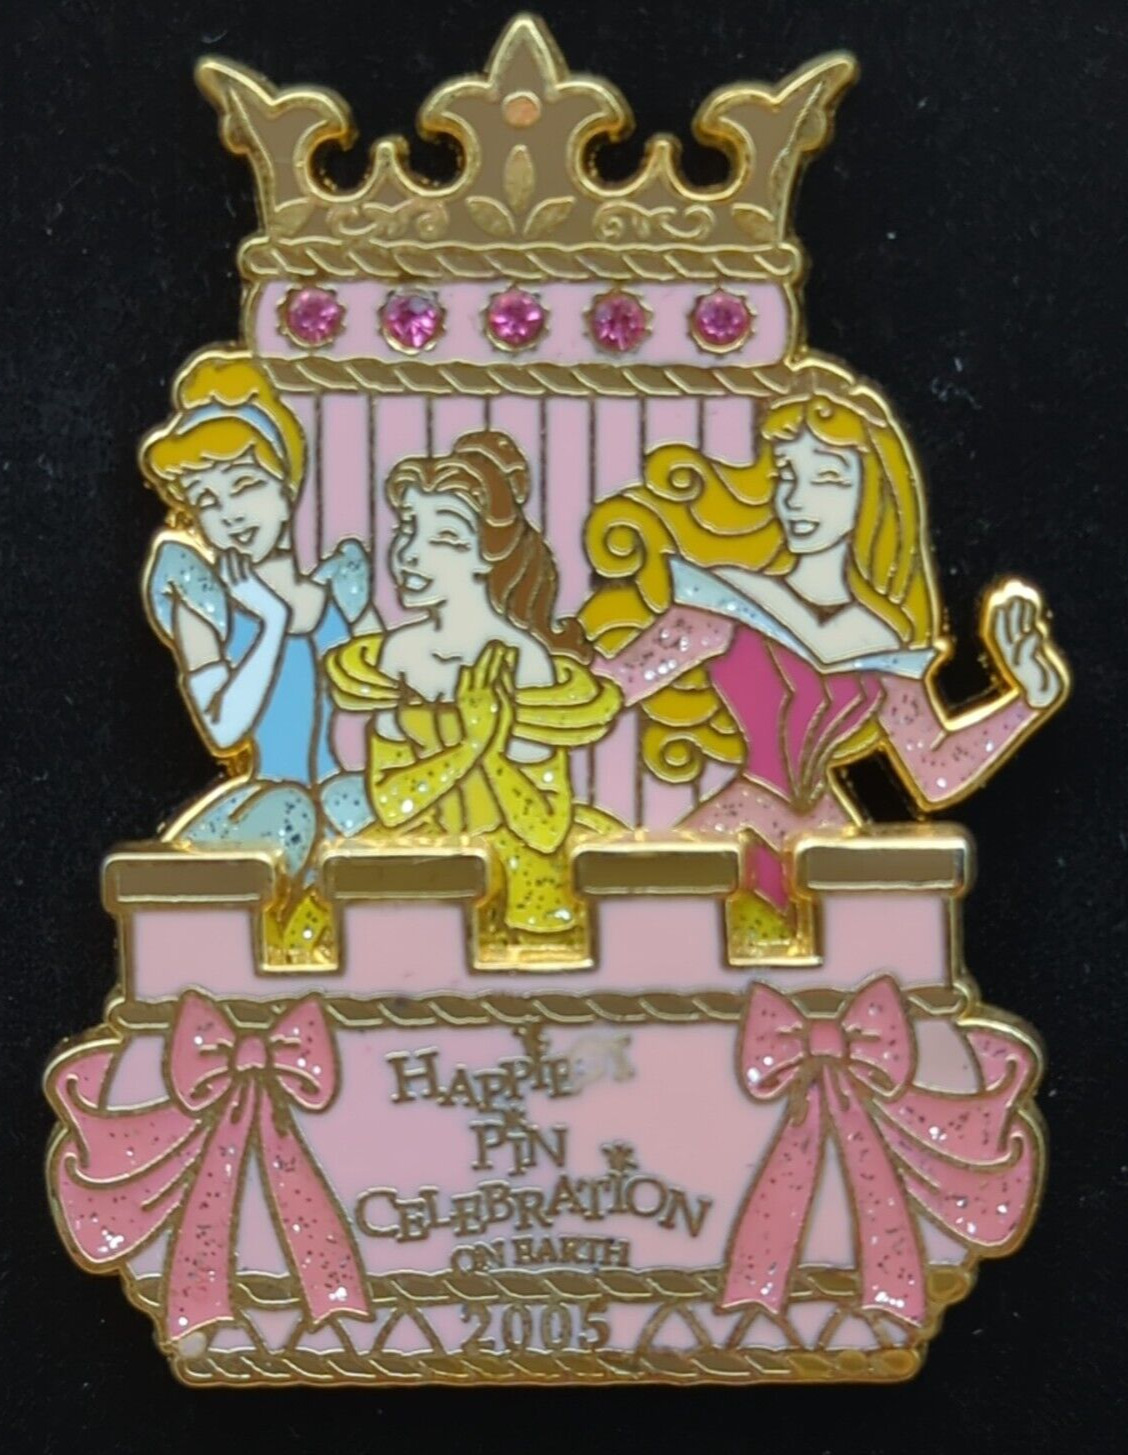 Disney Princess Happiest Pin Celebration On Earth 2005 PP 38395 LE 750